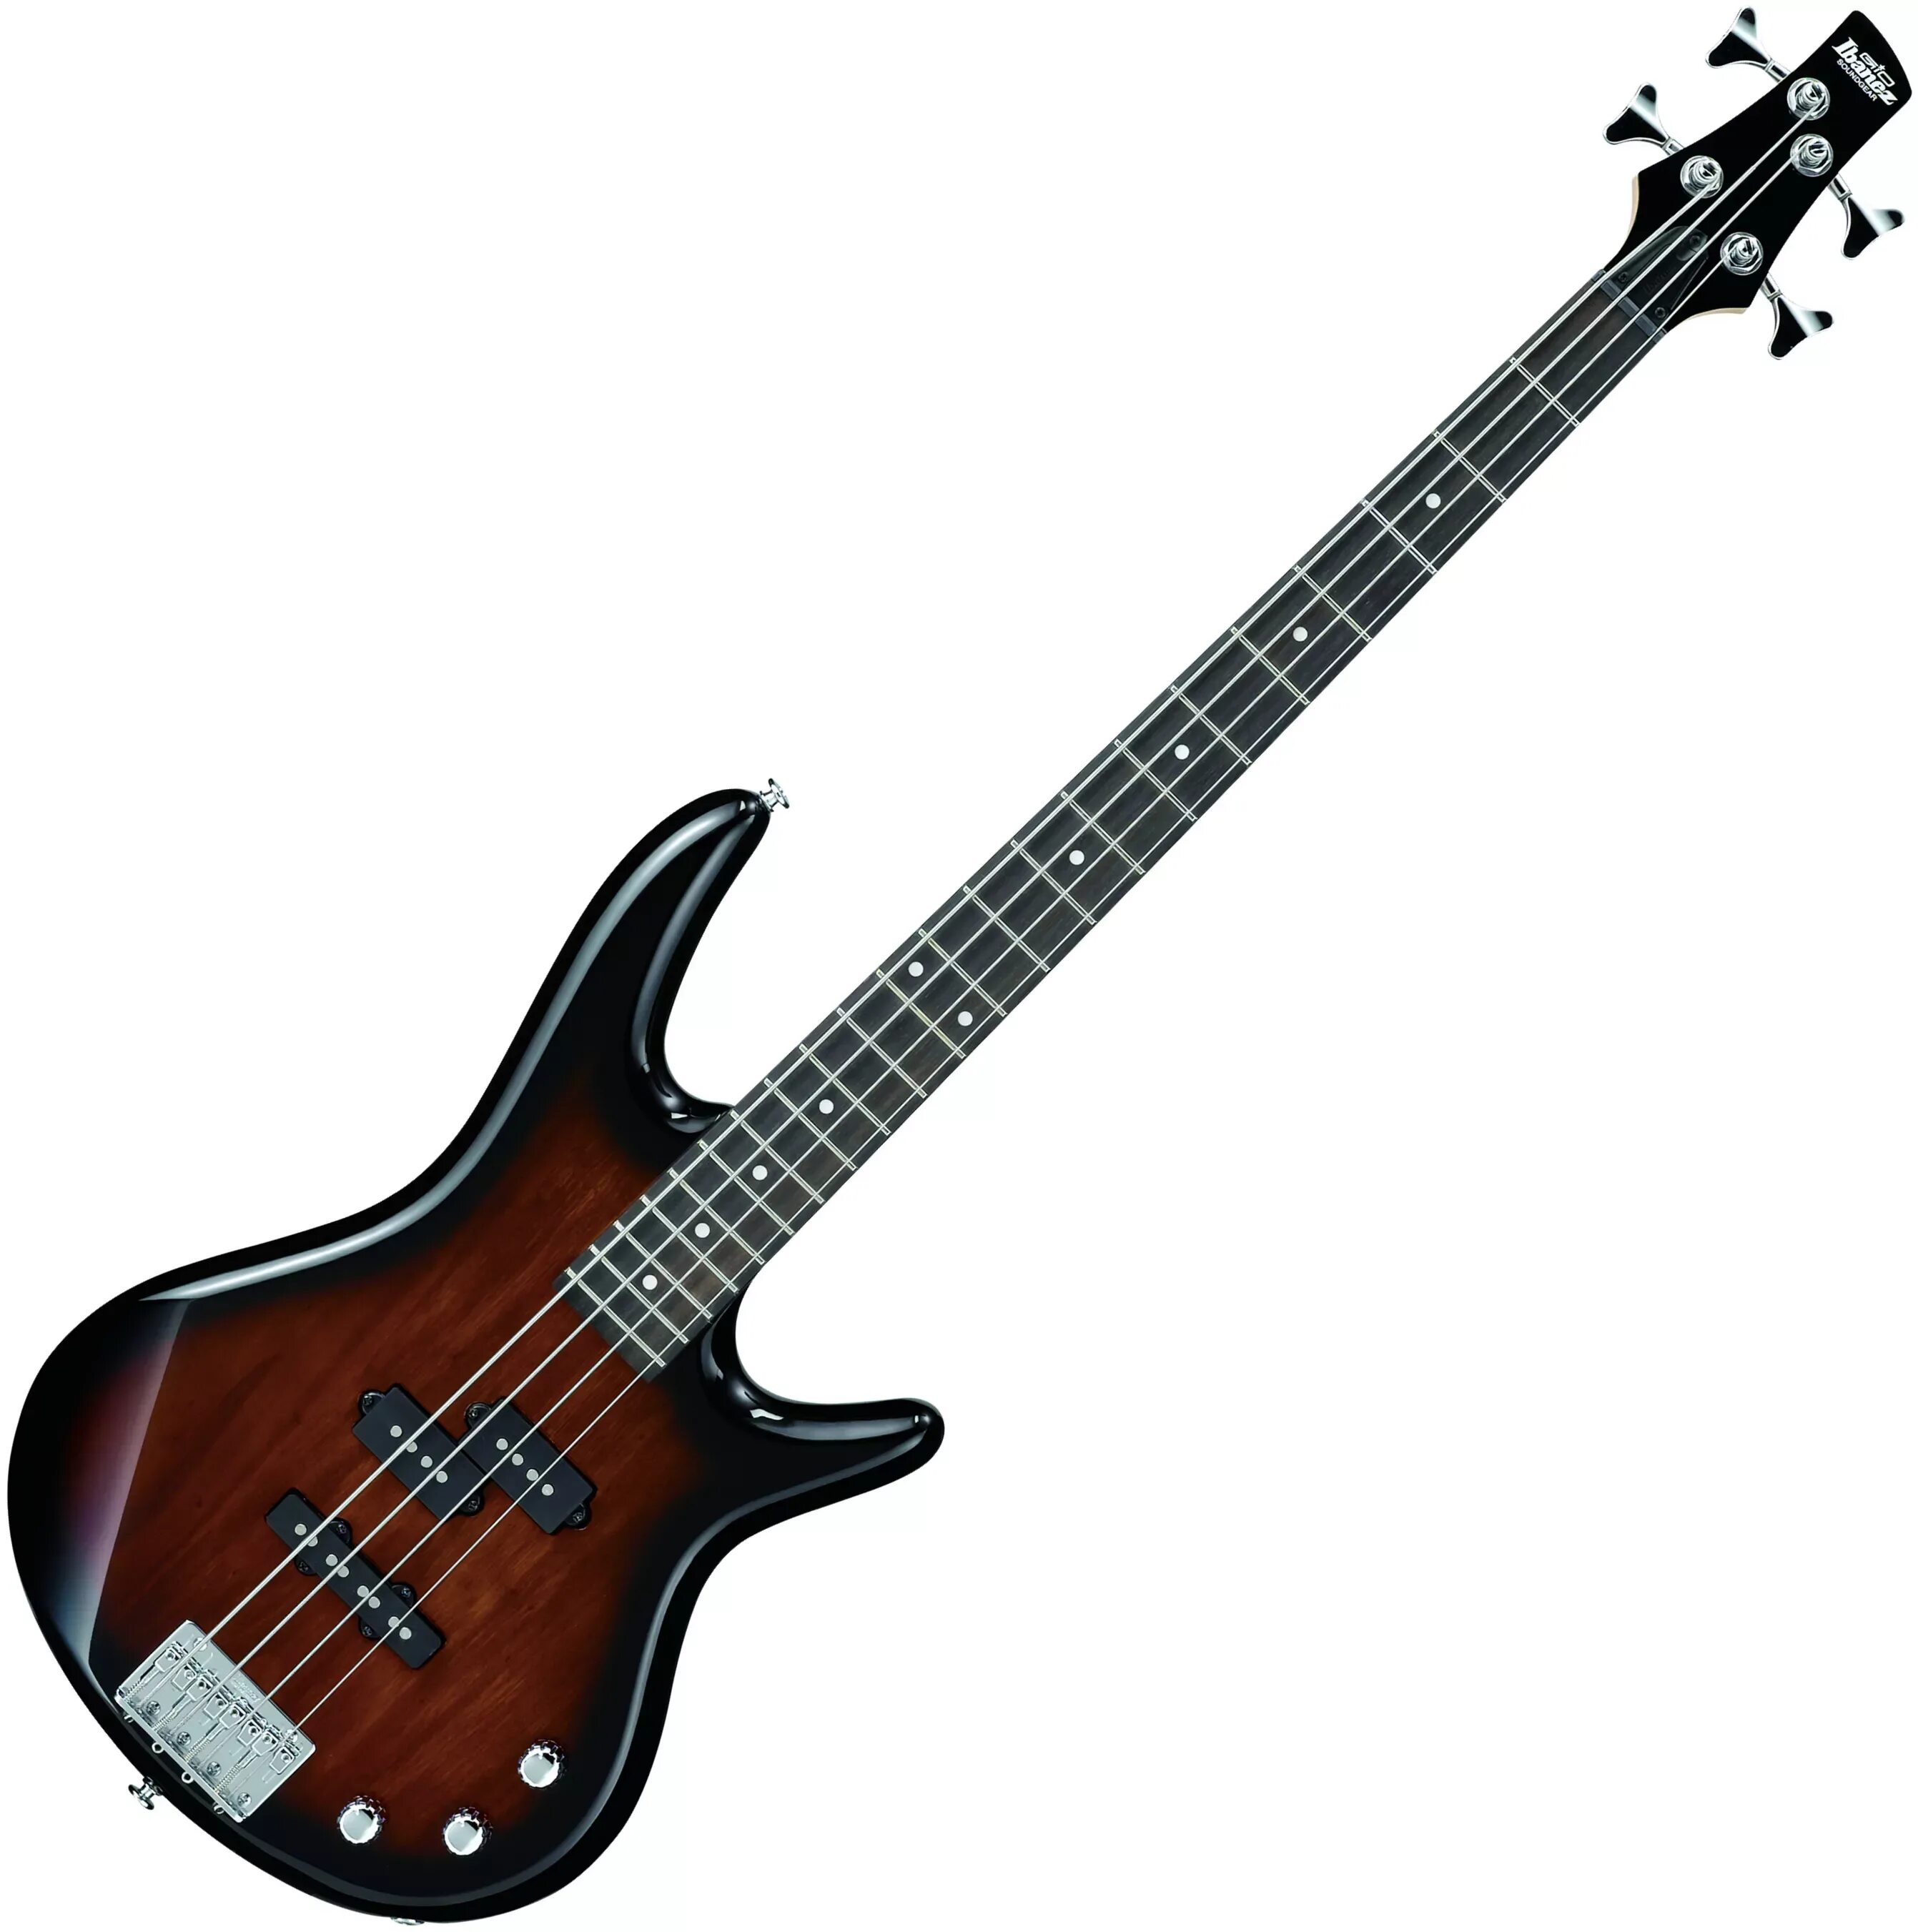 Ibanez gsr205 Red. Ibanez gsr300. Бас-гитара Ibanez gsr012ltd. Ibanez Bass.